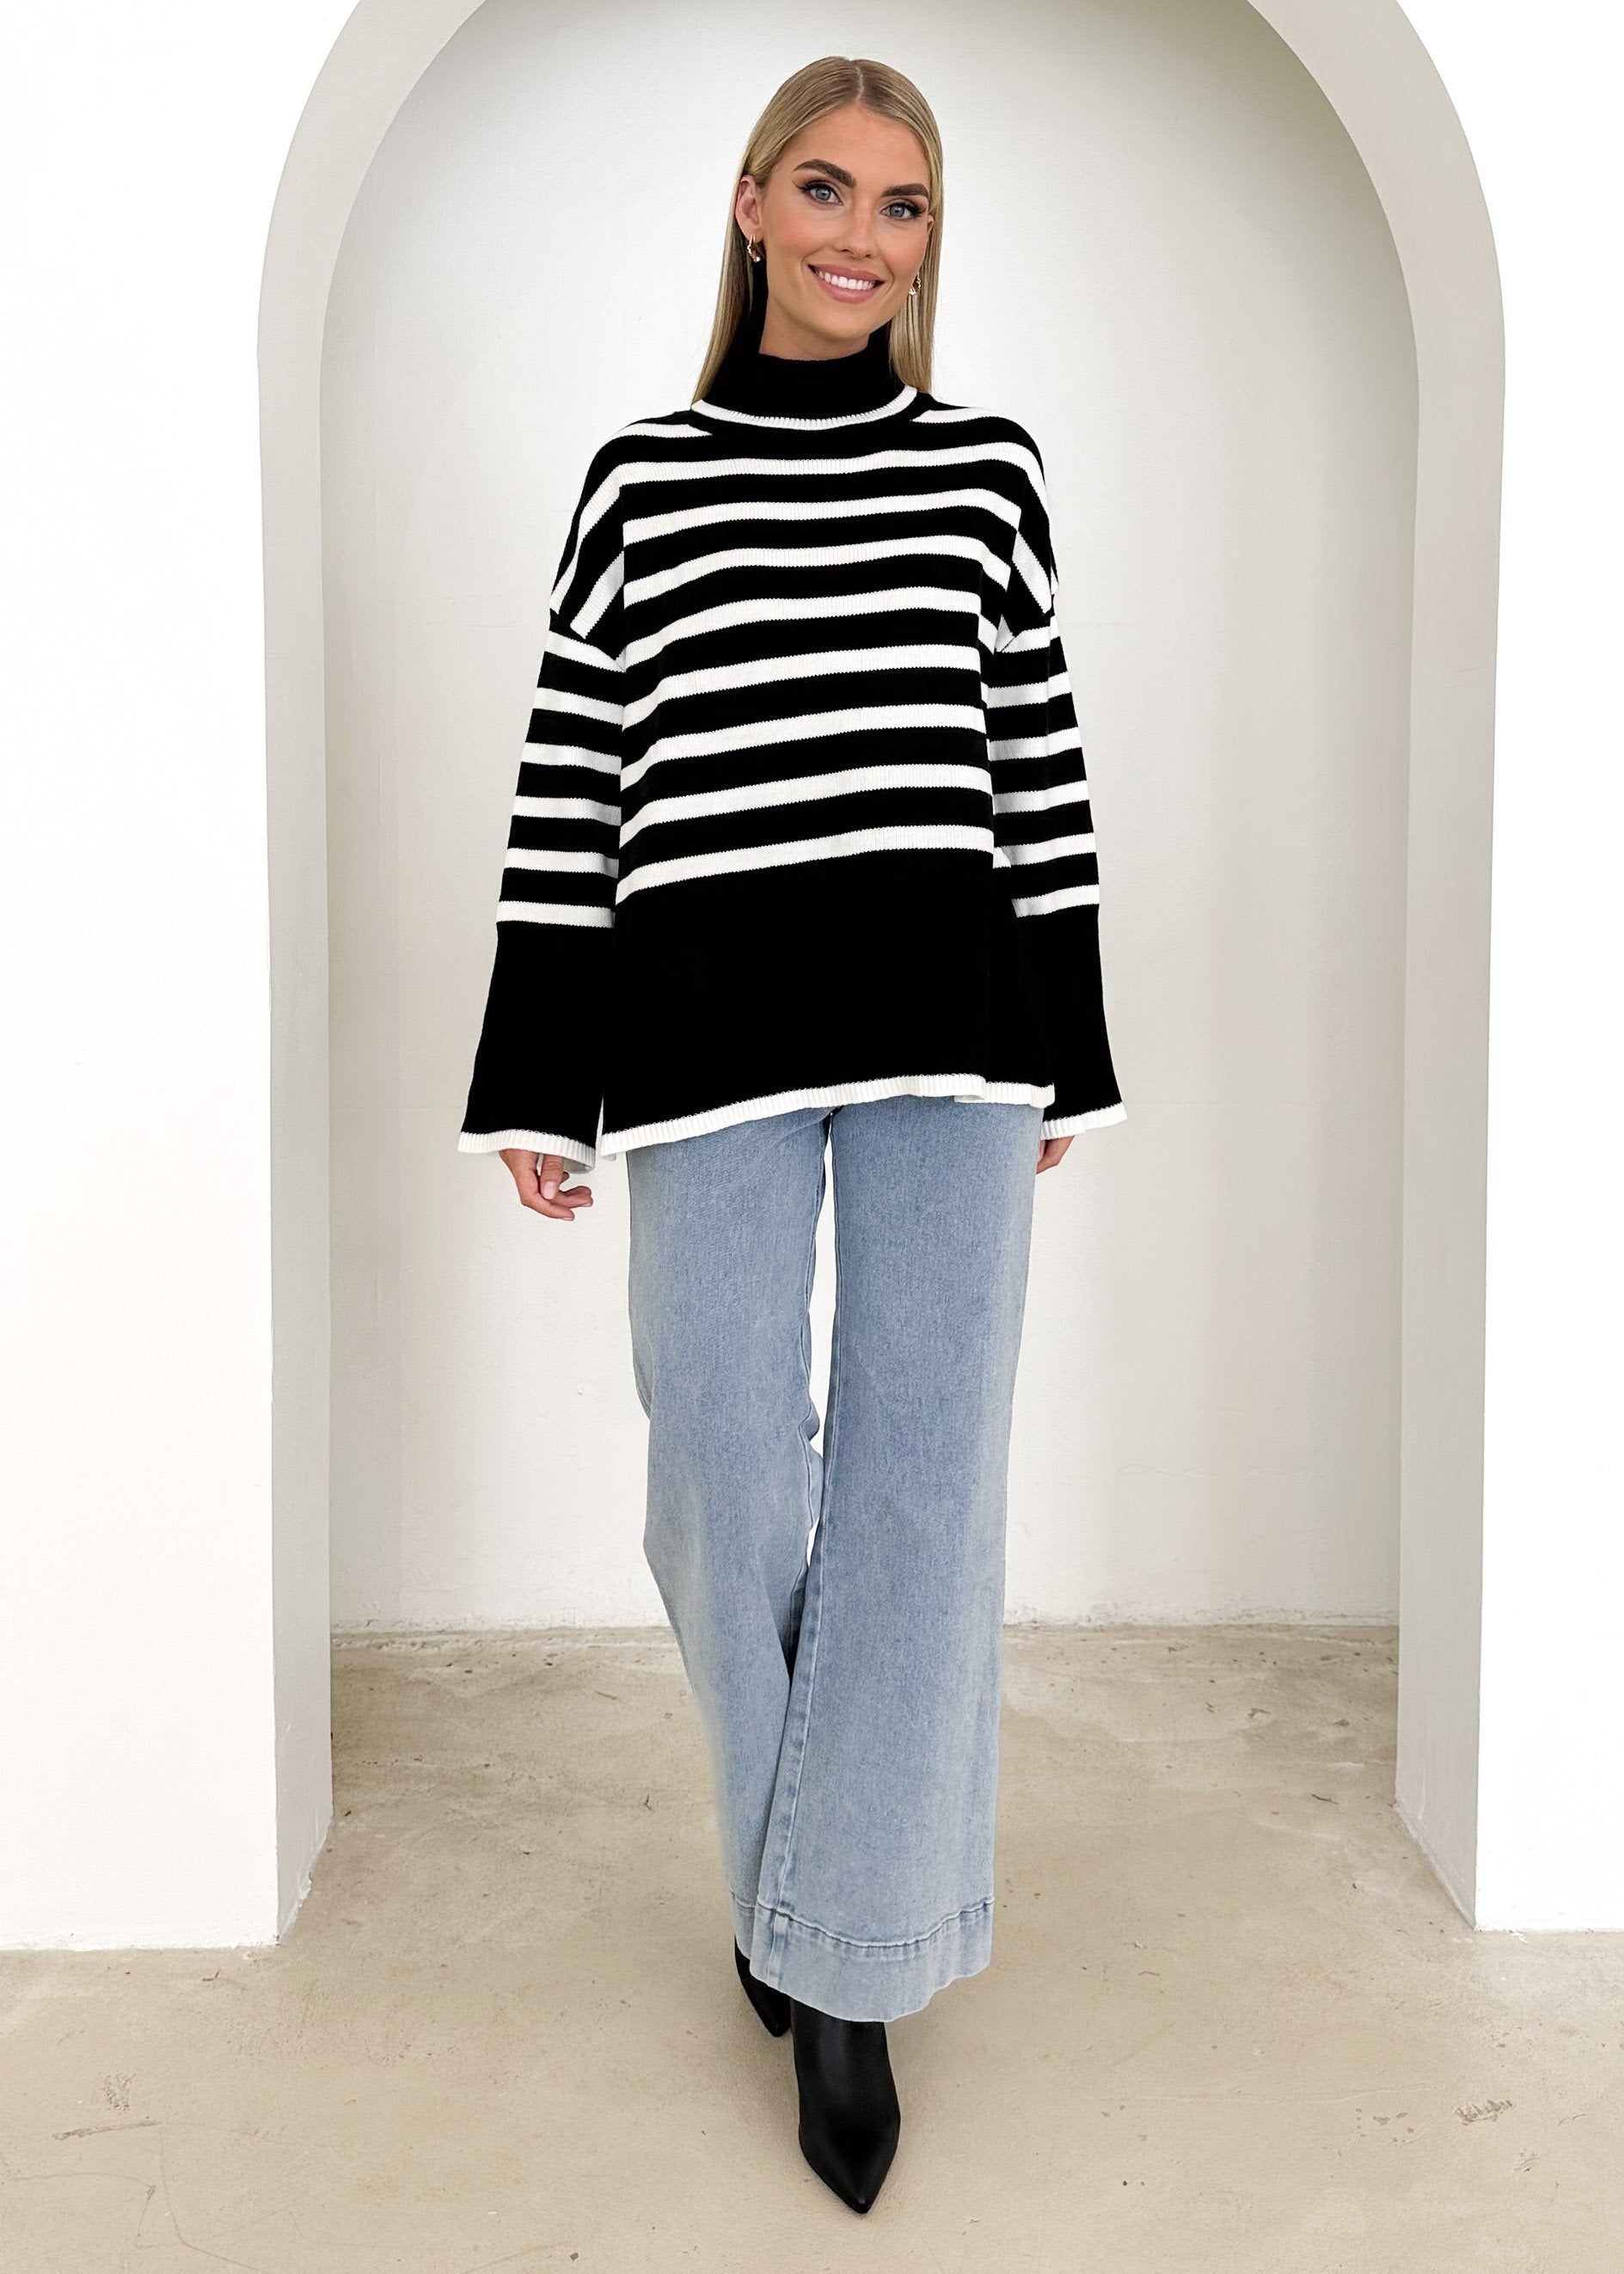 Klossy Sweater - Black Stripe